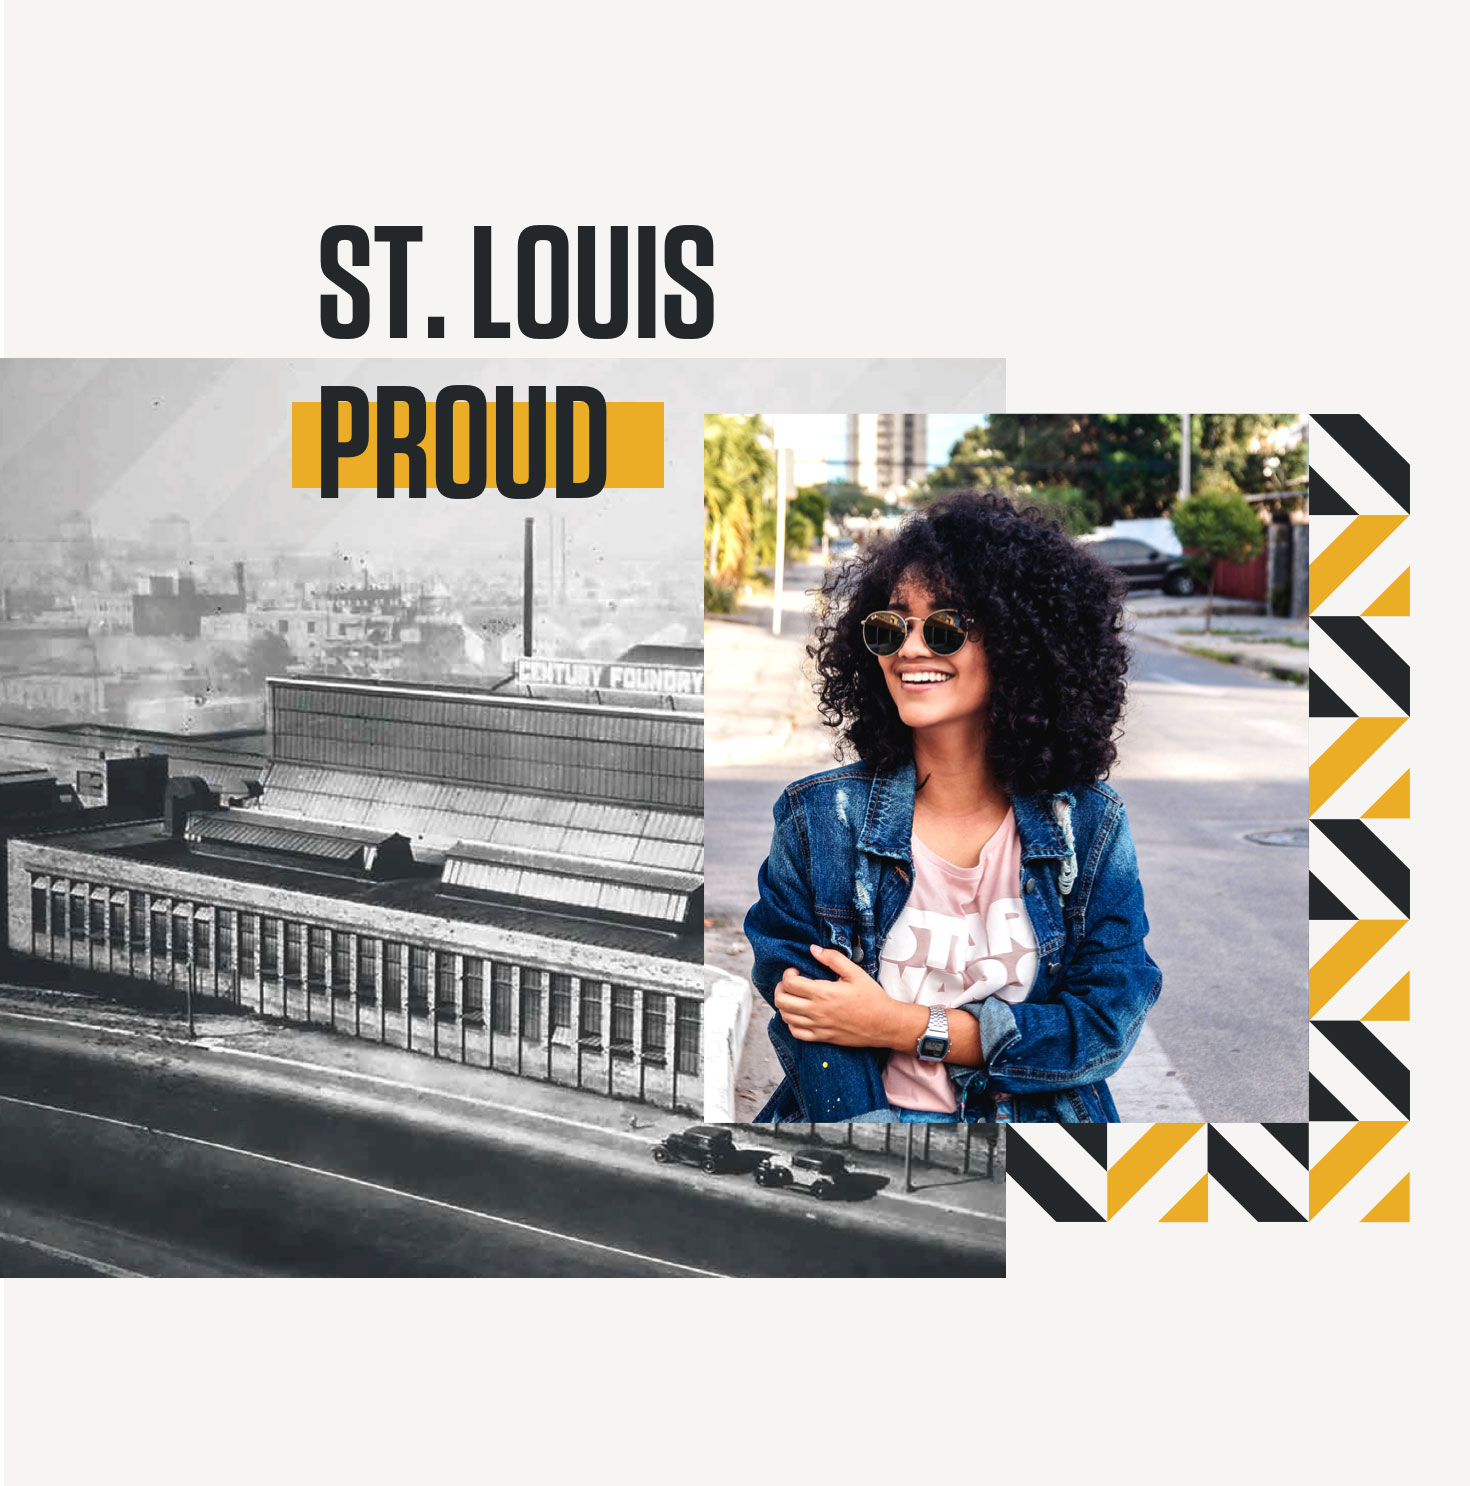 City Foundry St. Louis Website Design